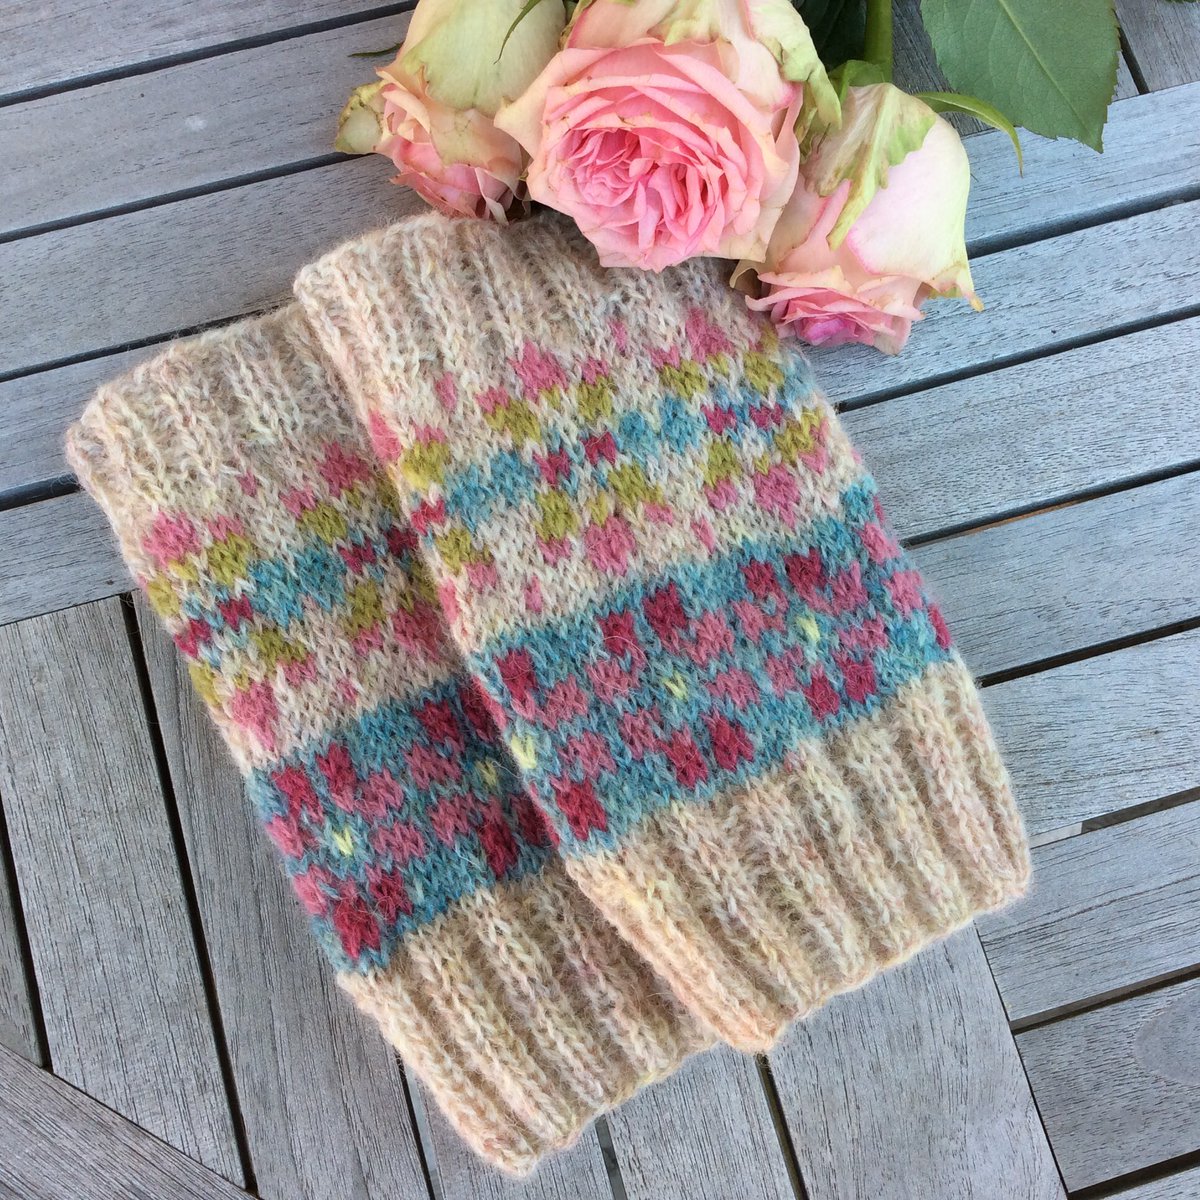 Wrist warmers for myself in Jamieson’s Shetland spindrift wool 💕#knitting #jamiesonsofshetland #shetlandwool #fairisle #fairisleknitting